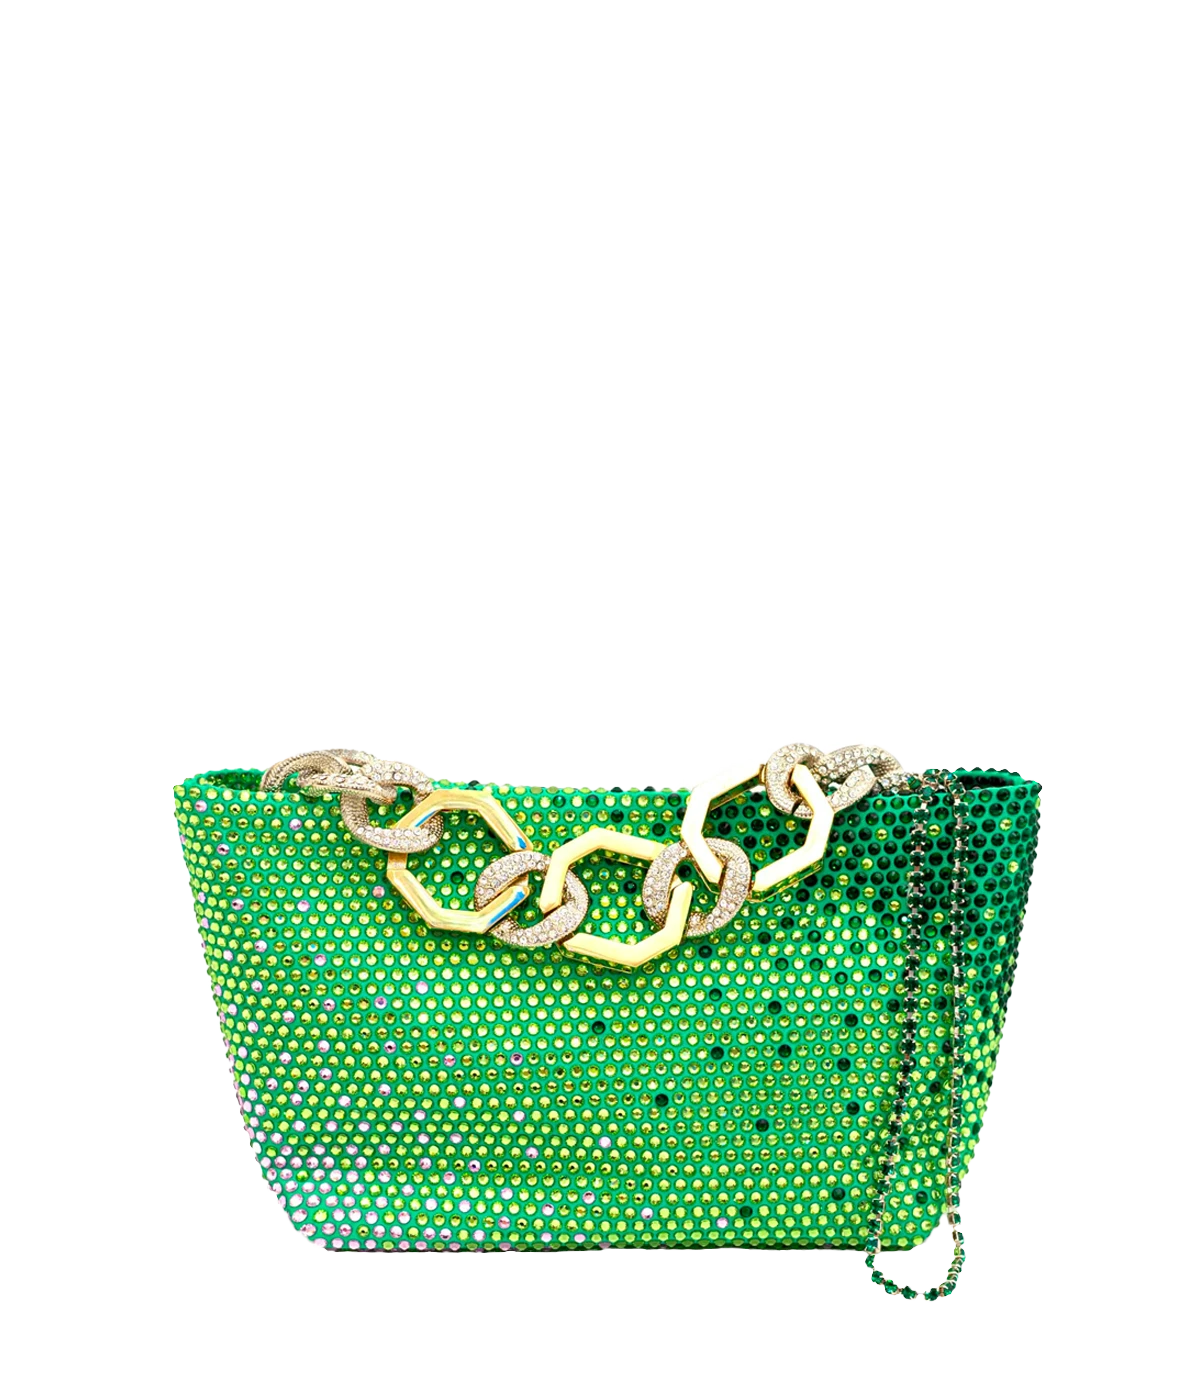 Jessye Satin Bag in Agata & Crystal Emerald